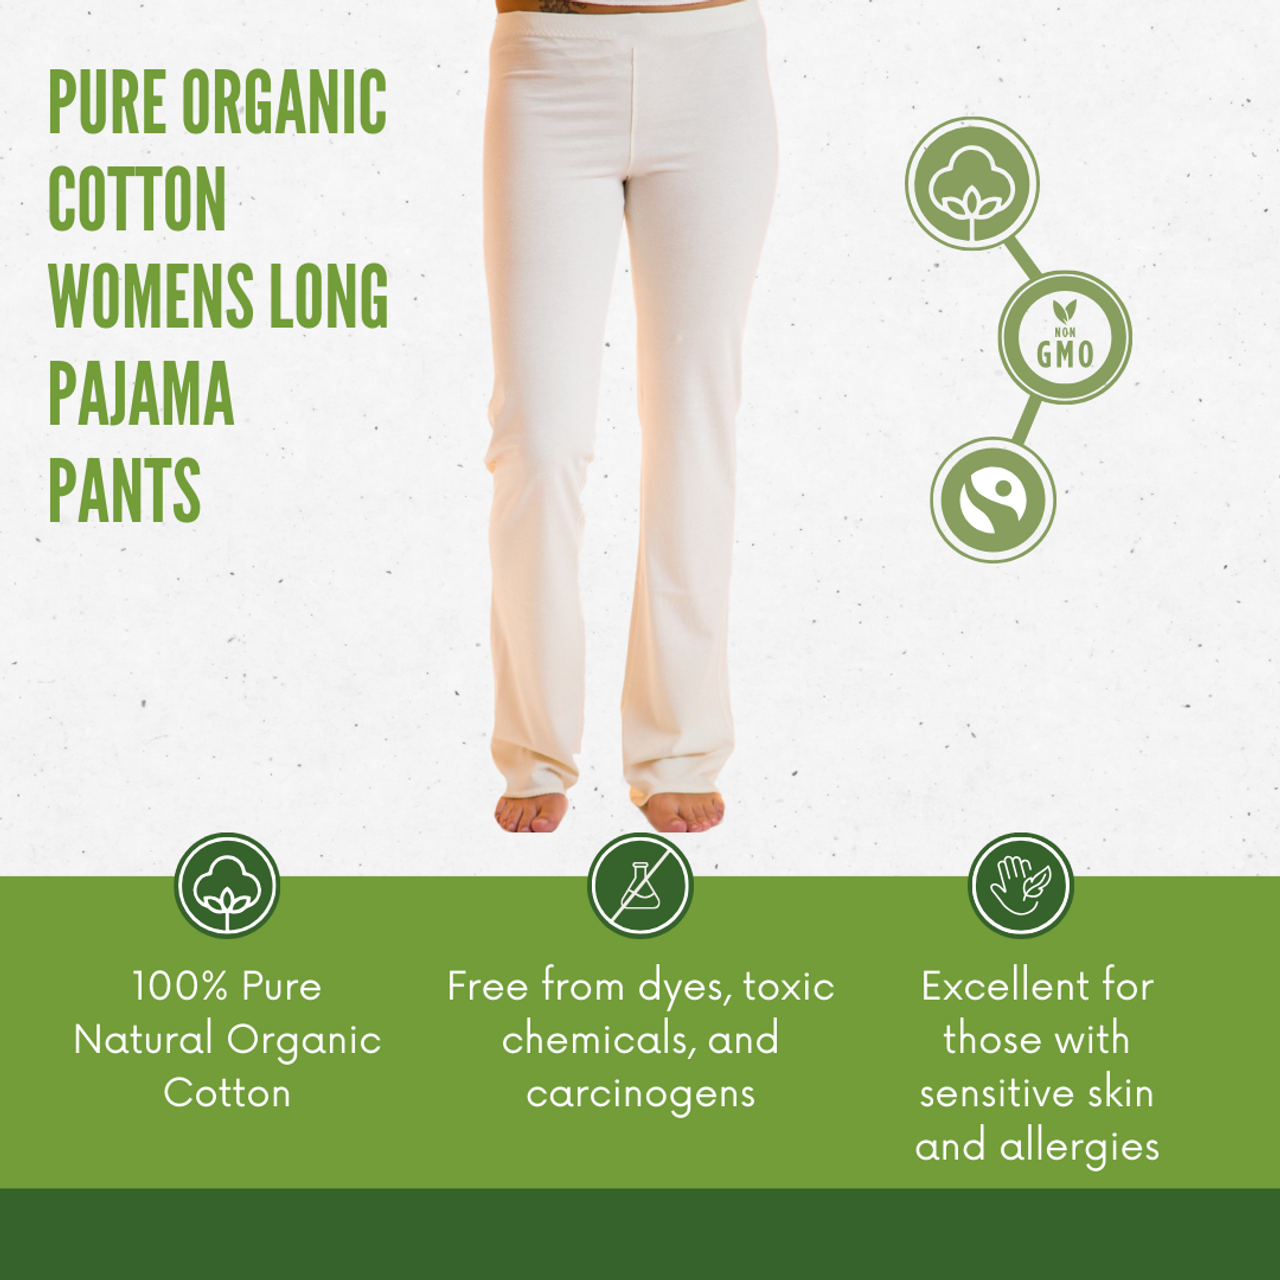 Women Pajama Pants 100% Cotton Fits Most Body Shapes Elastic